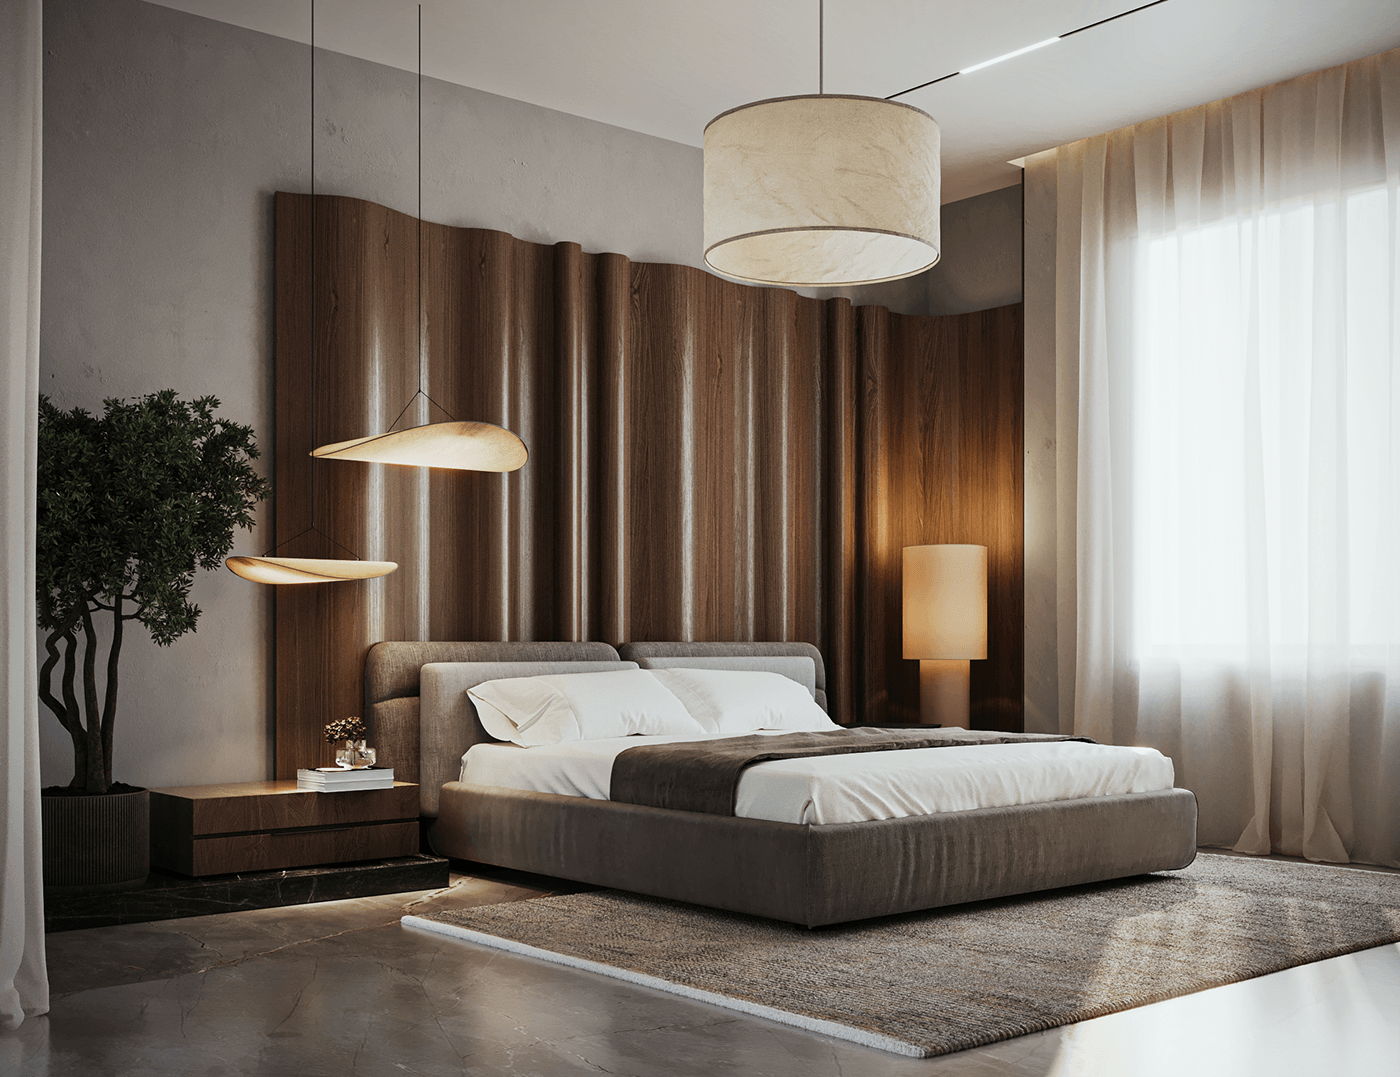 Interior design architecture Render minimal home decor